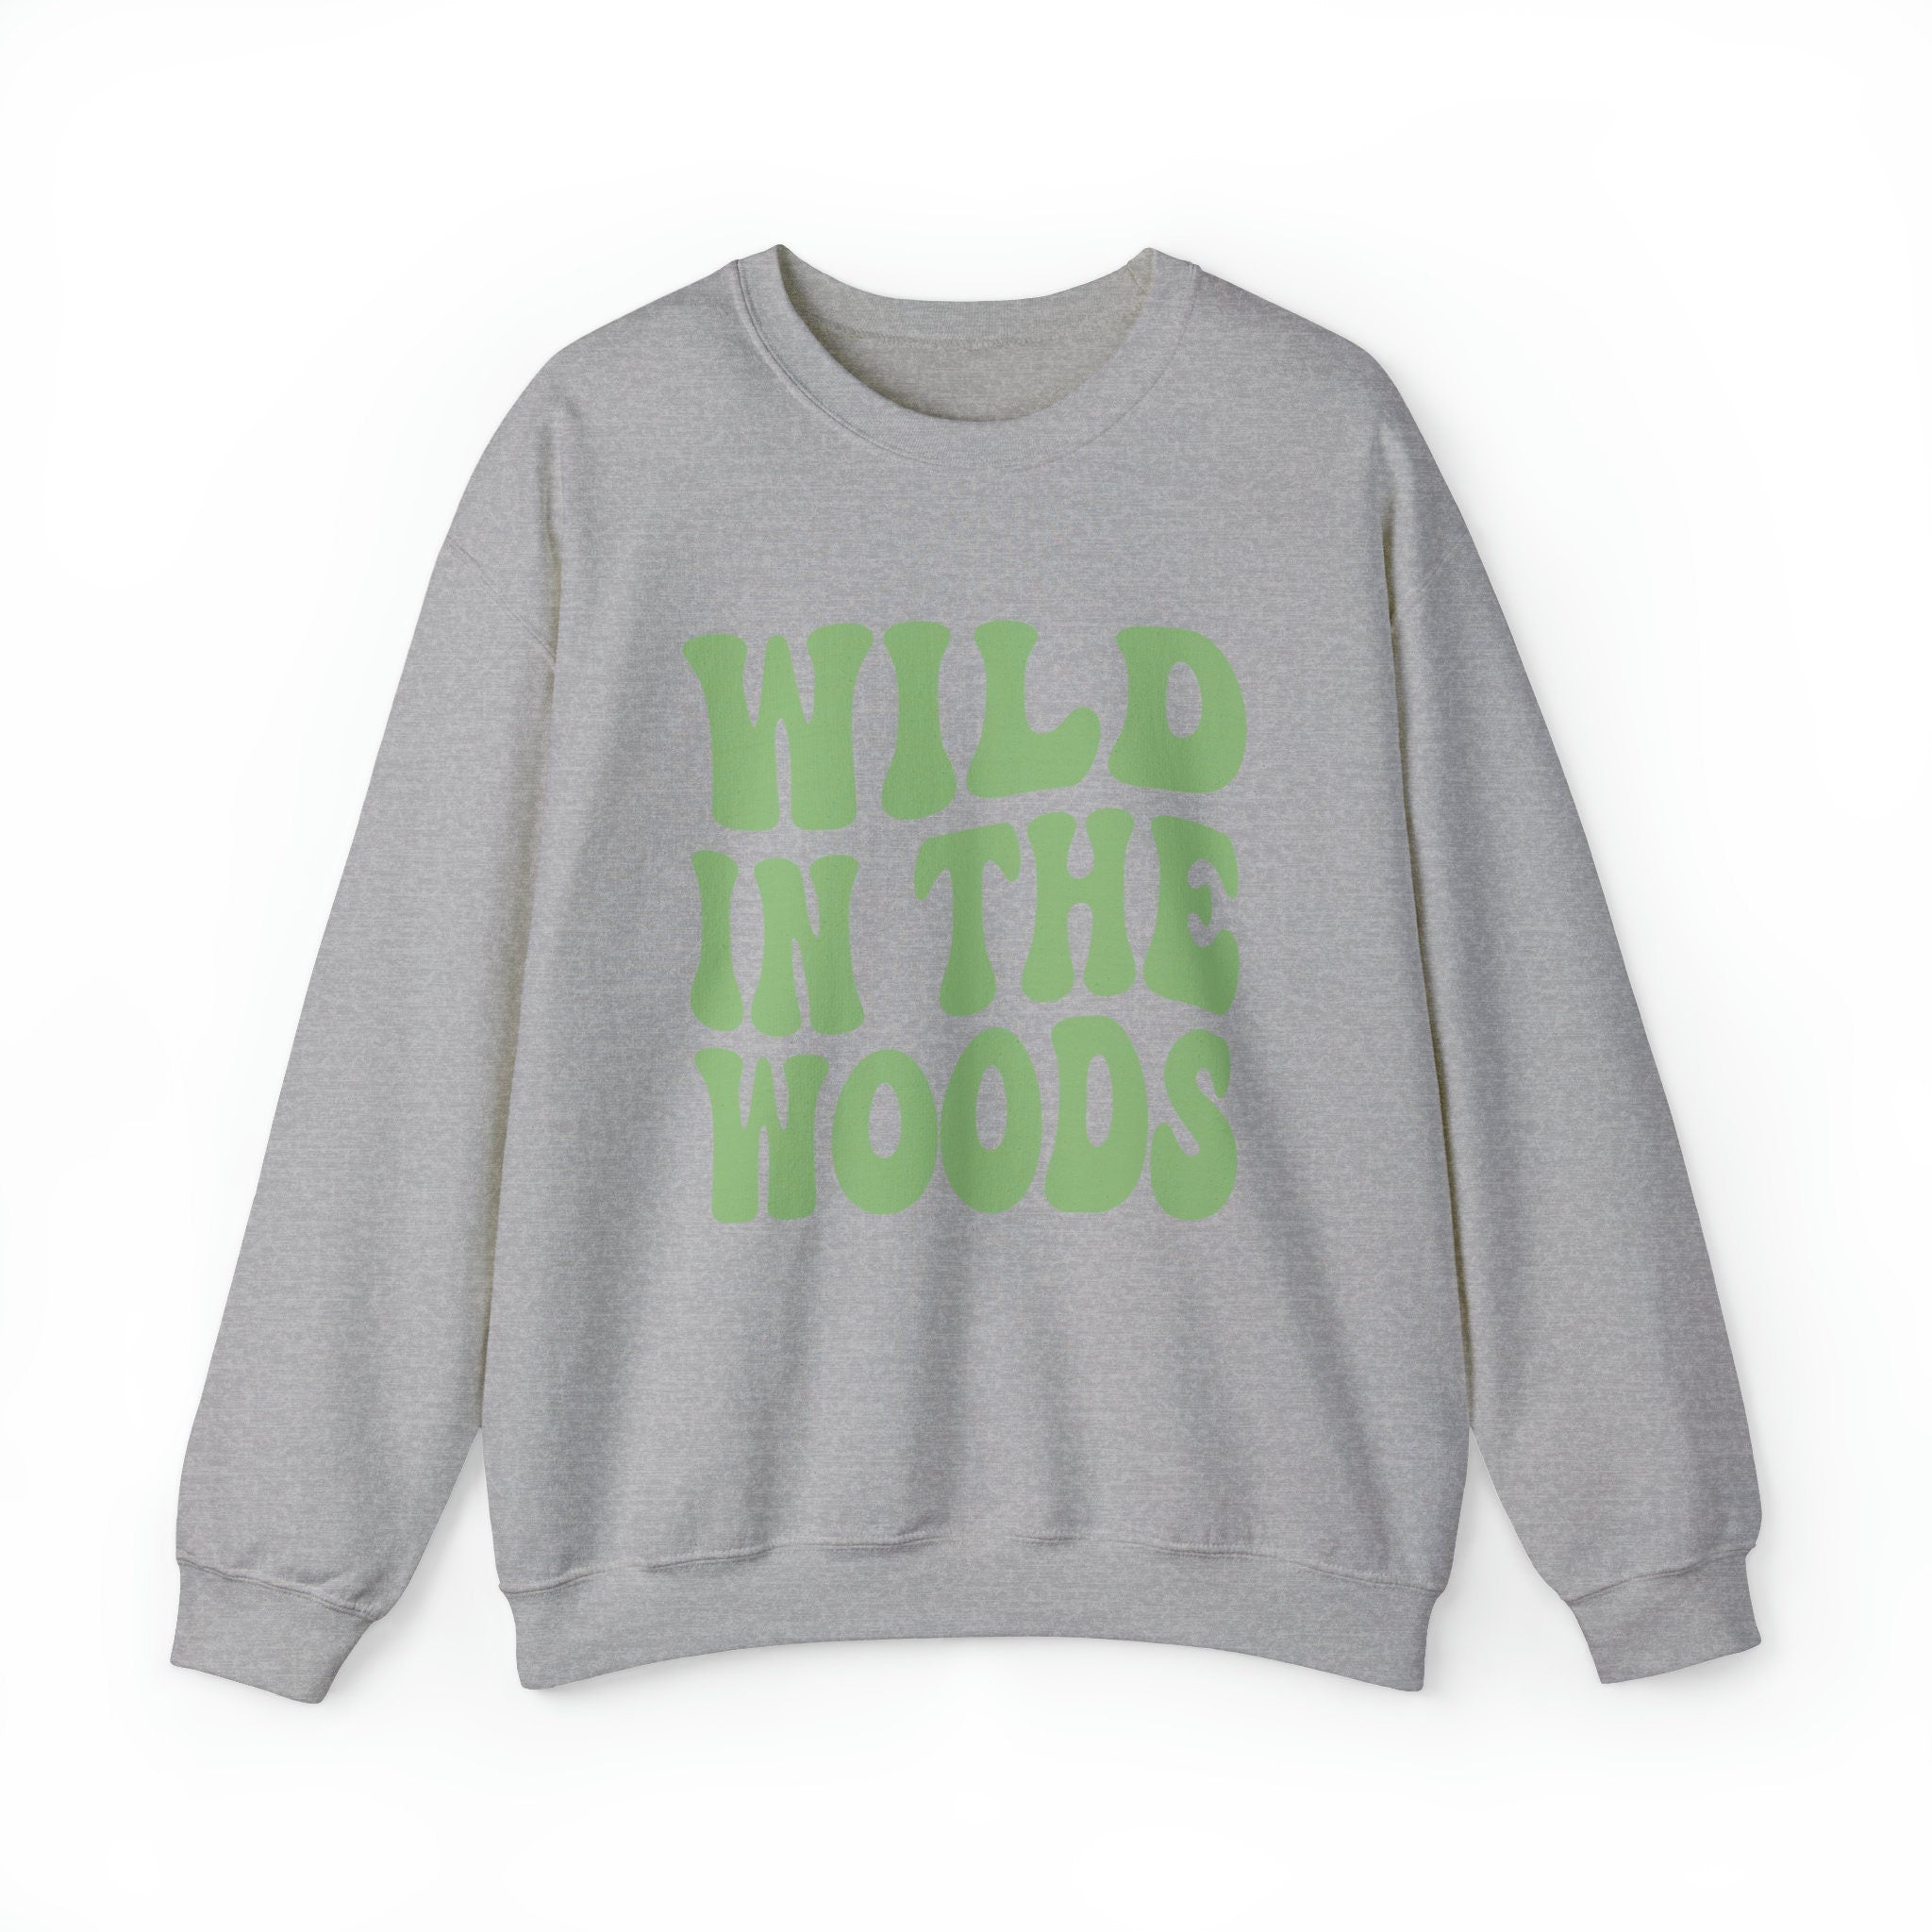 camp bachelorette gift sweatshirt, wild in the woods, camping bachelorette, camp bachelorette, forest themed bachelorette sweatshirt